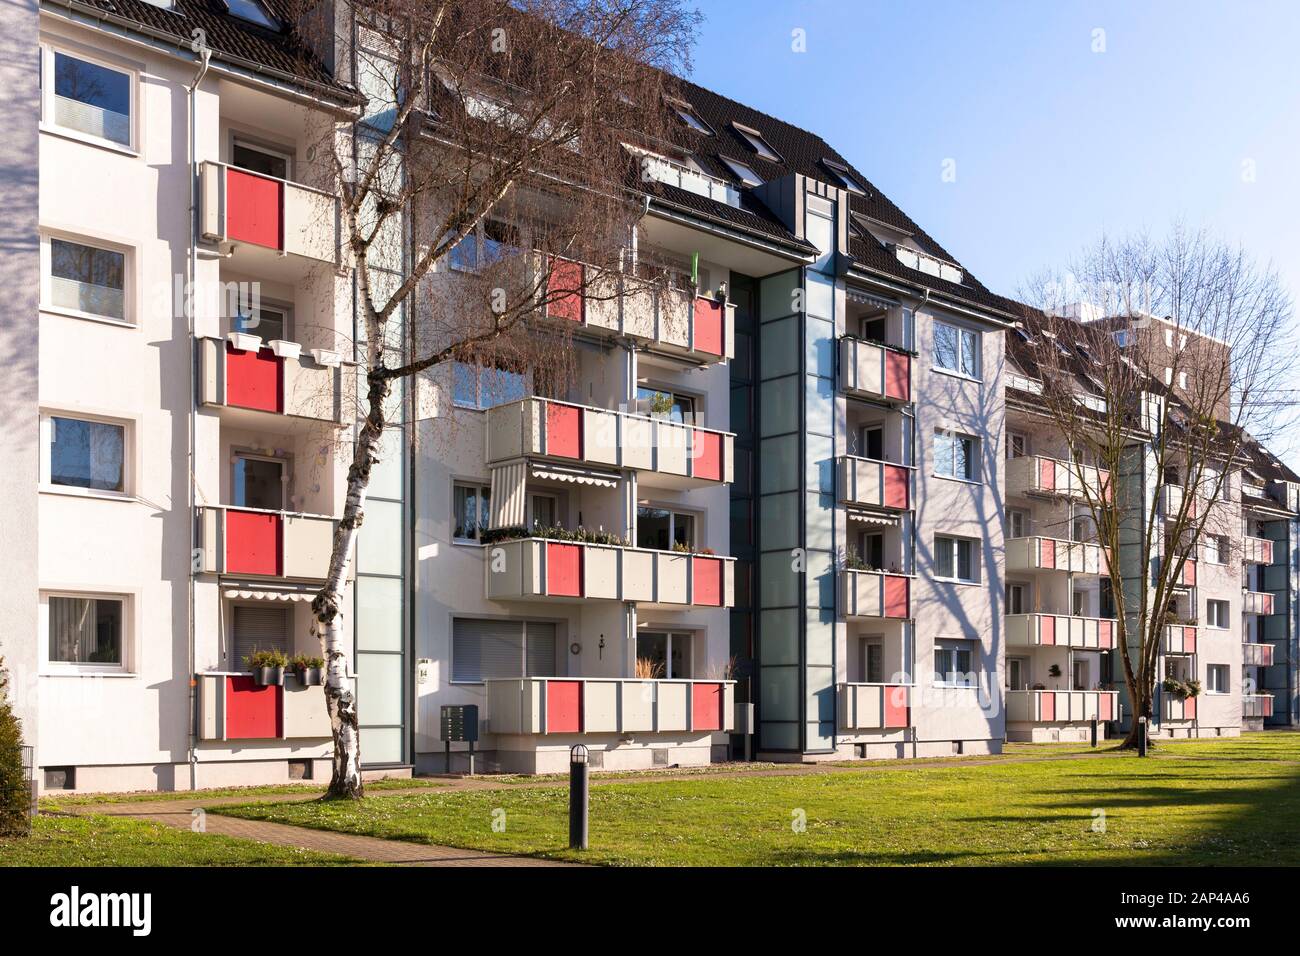 apartment houses on Eschweiler street in the district Braunsfeld, Cologne, Germany.  Mehrfamilienhaeuser an der Eschweiler Strasse im Stadtteil Brauns Stock Photo